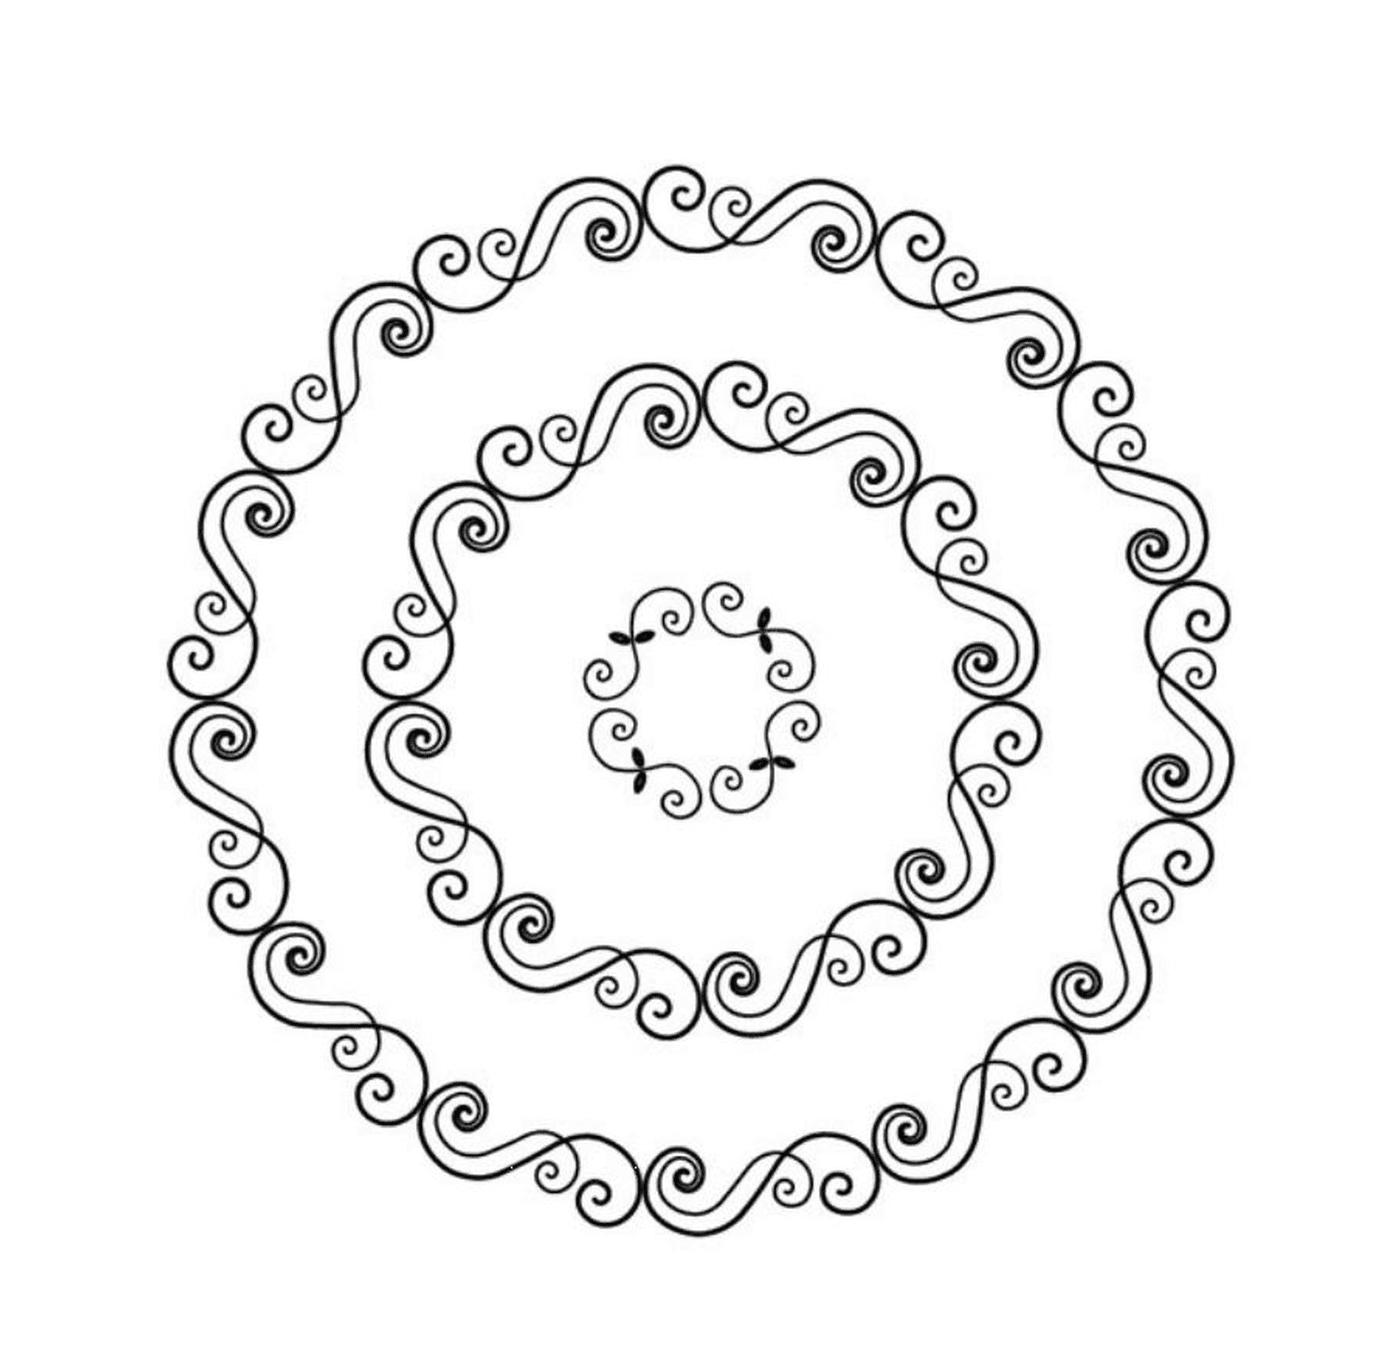  Cuatro mandalas espirales 